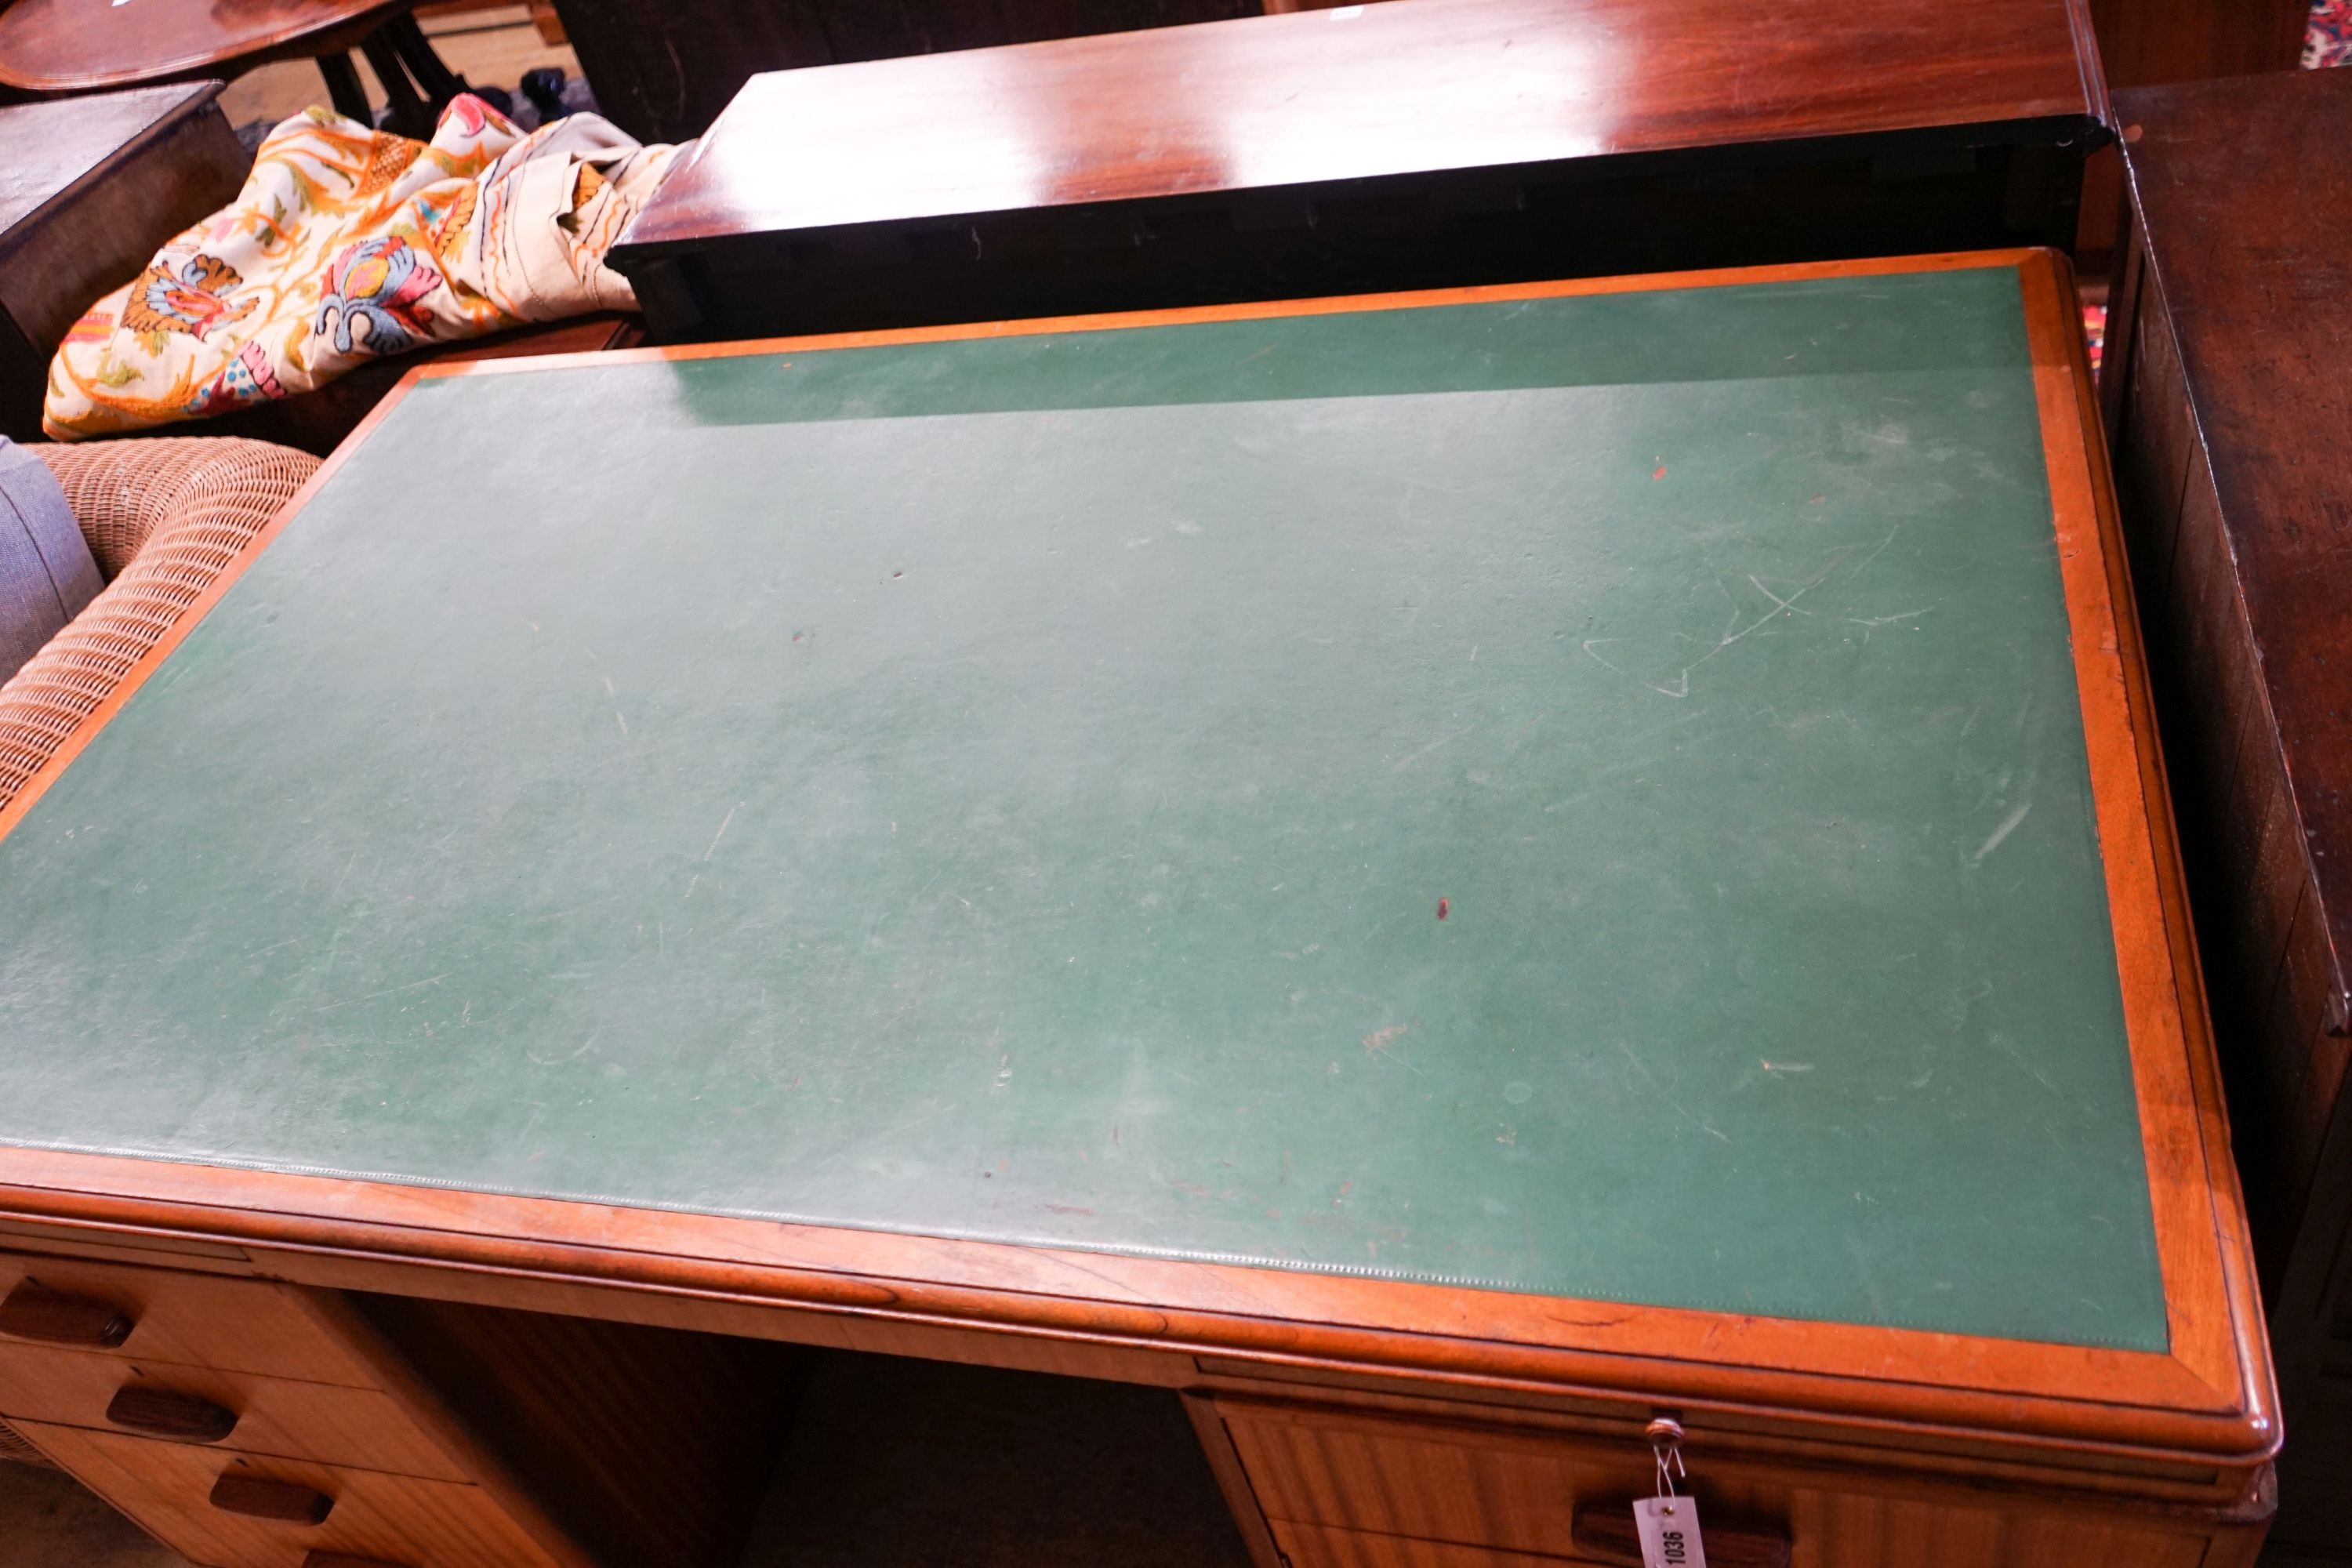 A mid century design teak kneehole desk, bears a Waring & Gillow stamp, length 168cm, depth 106cm, height 74cm